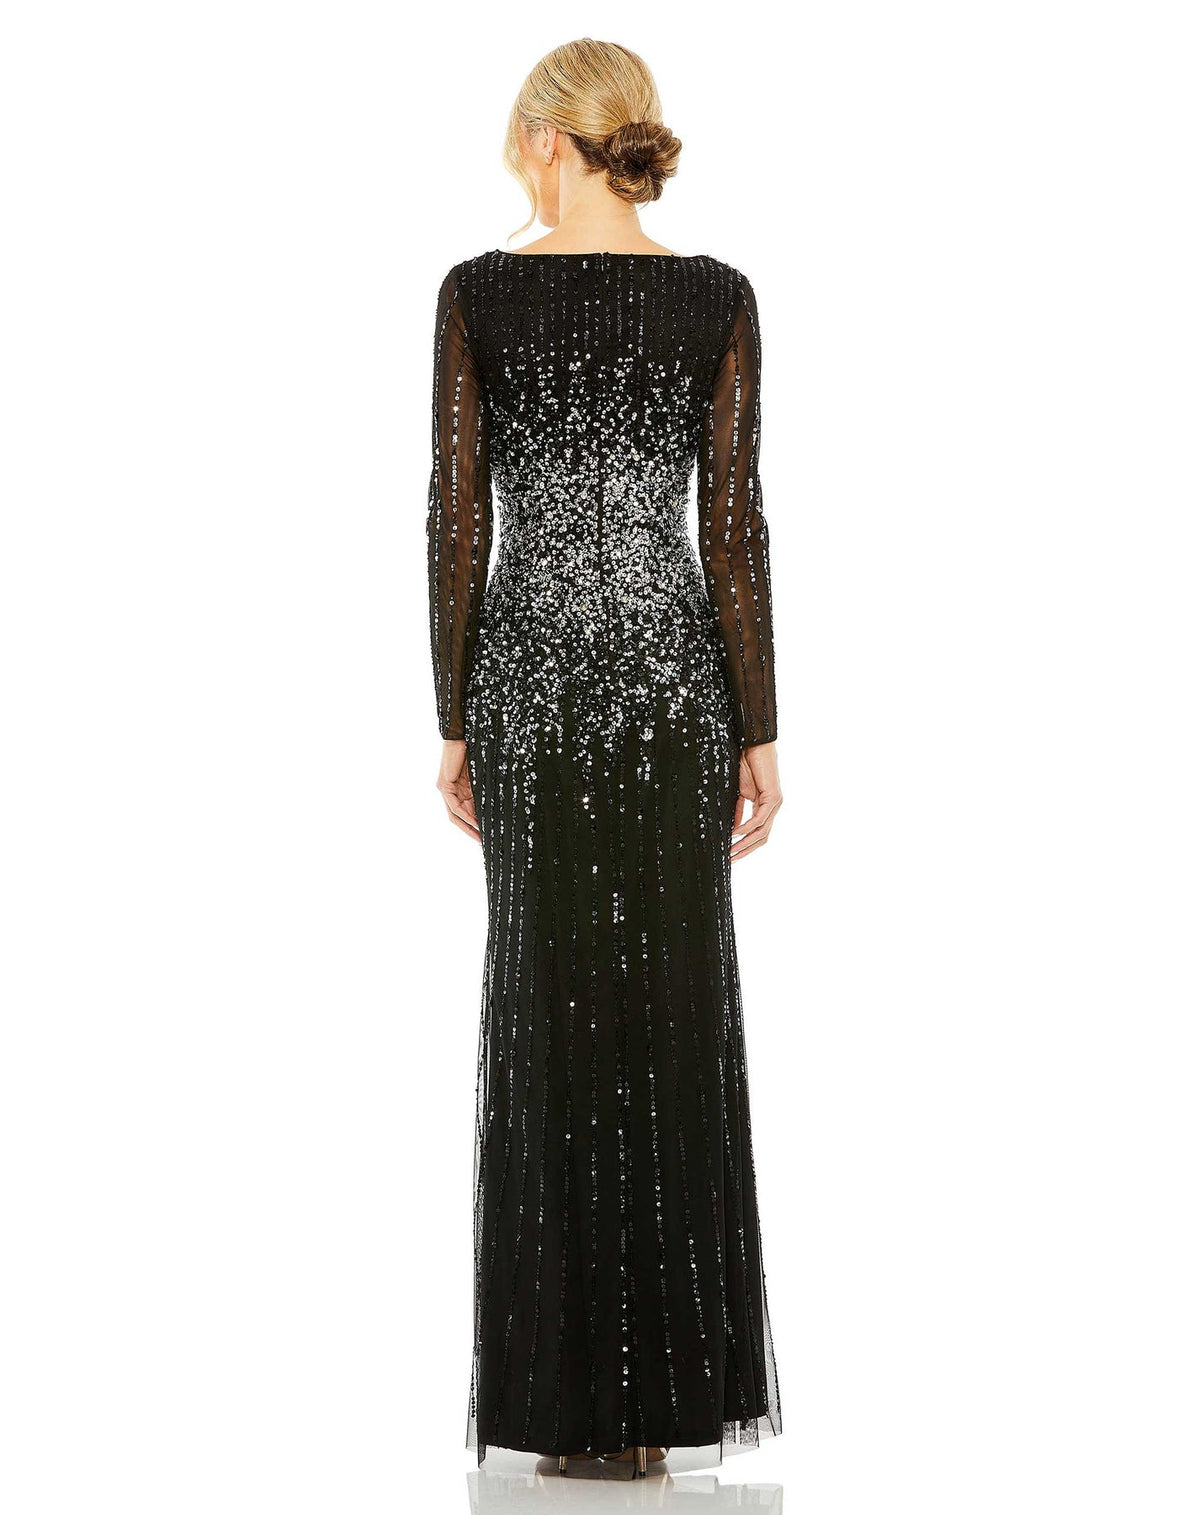 Mac Duggal Style #30763 High neck sequin embellished A-line dress - Black back view